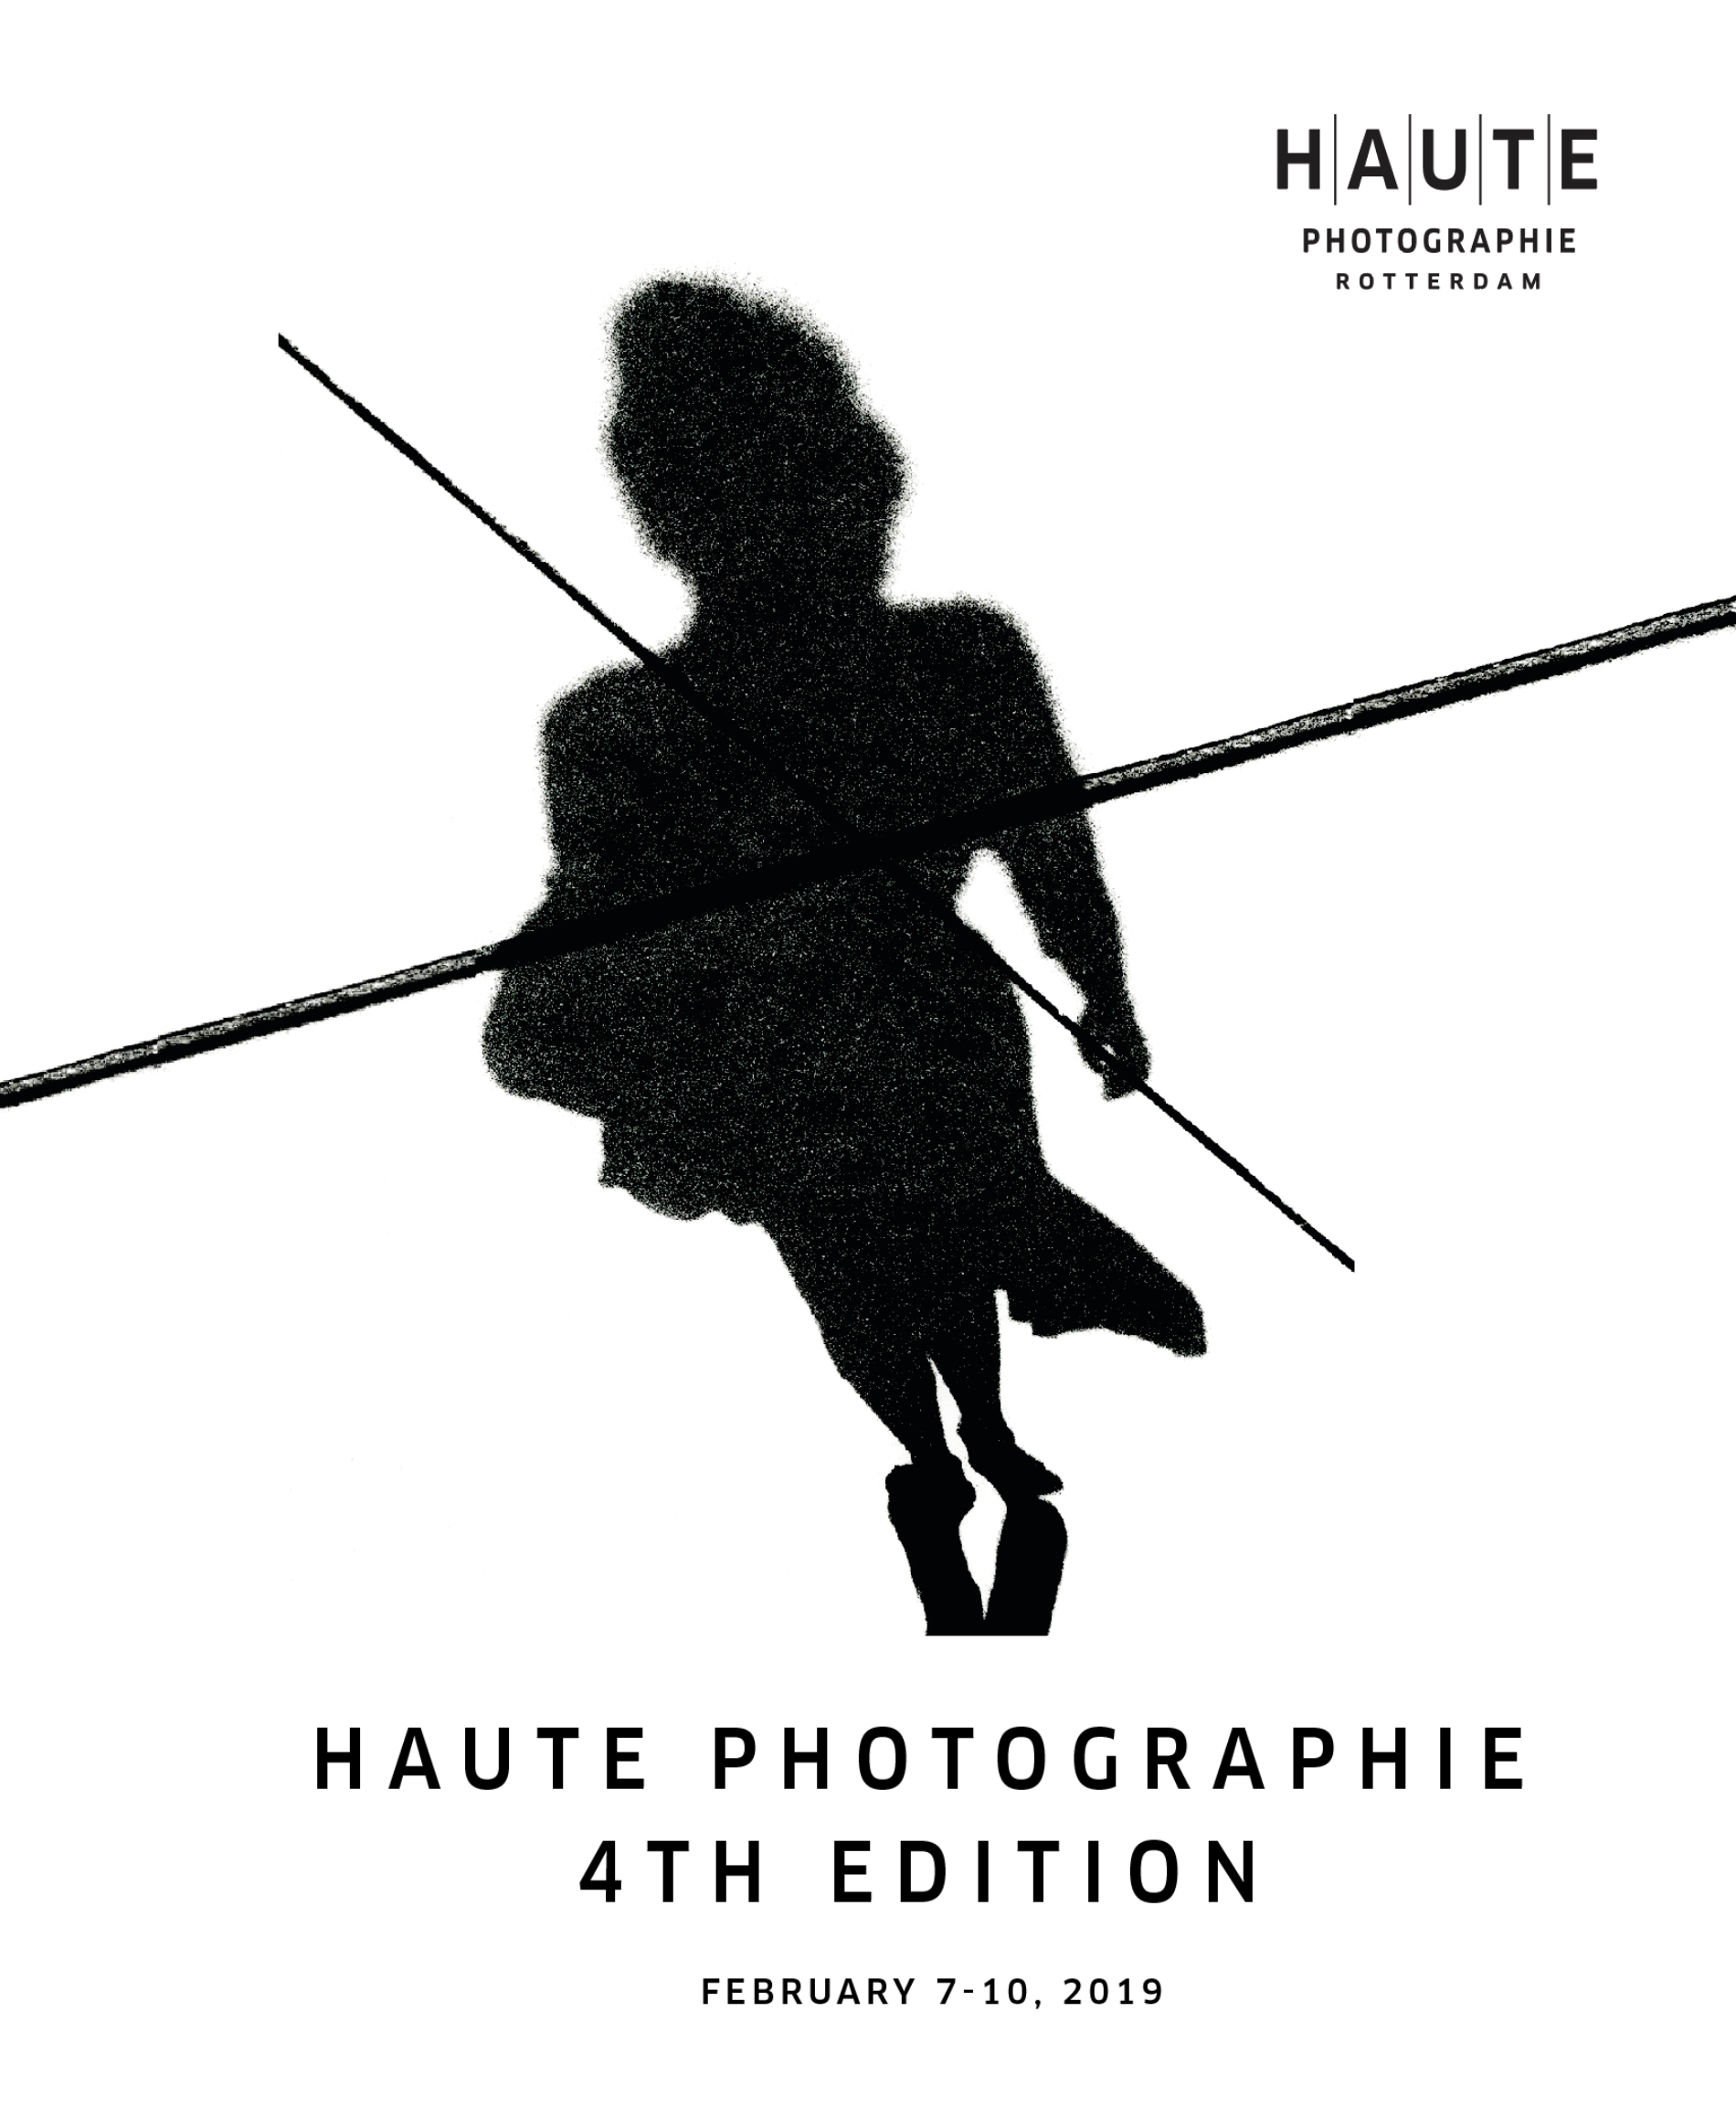 Haute Photographie – Las Palmas, Rotterdam – February 7-10, 2019